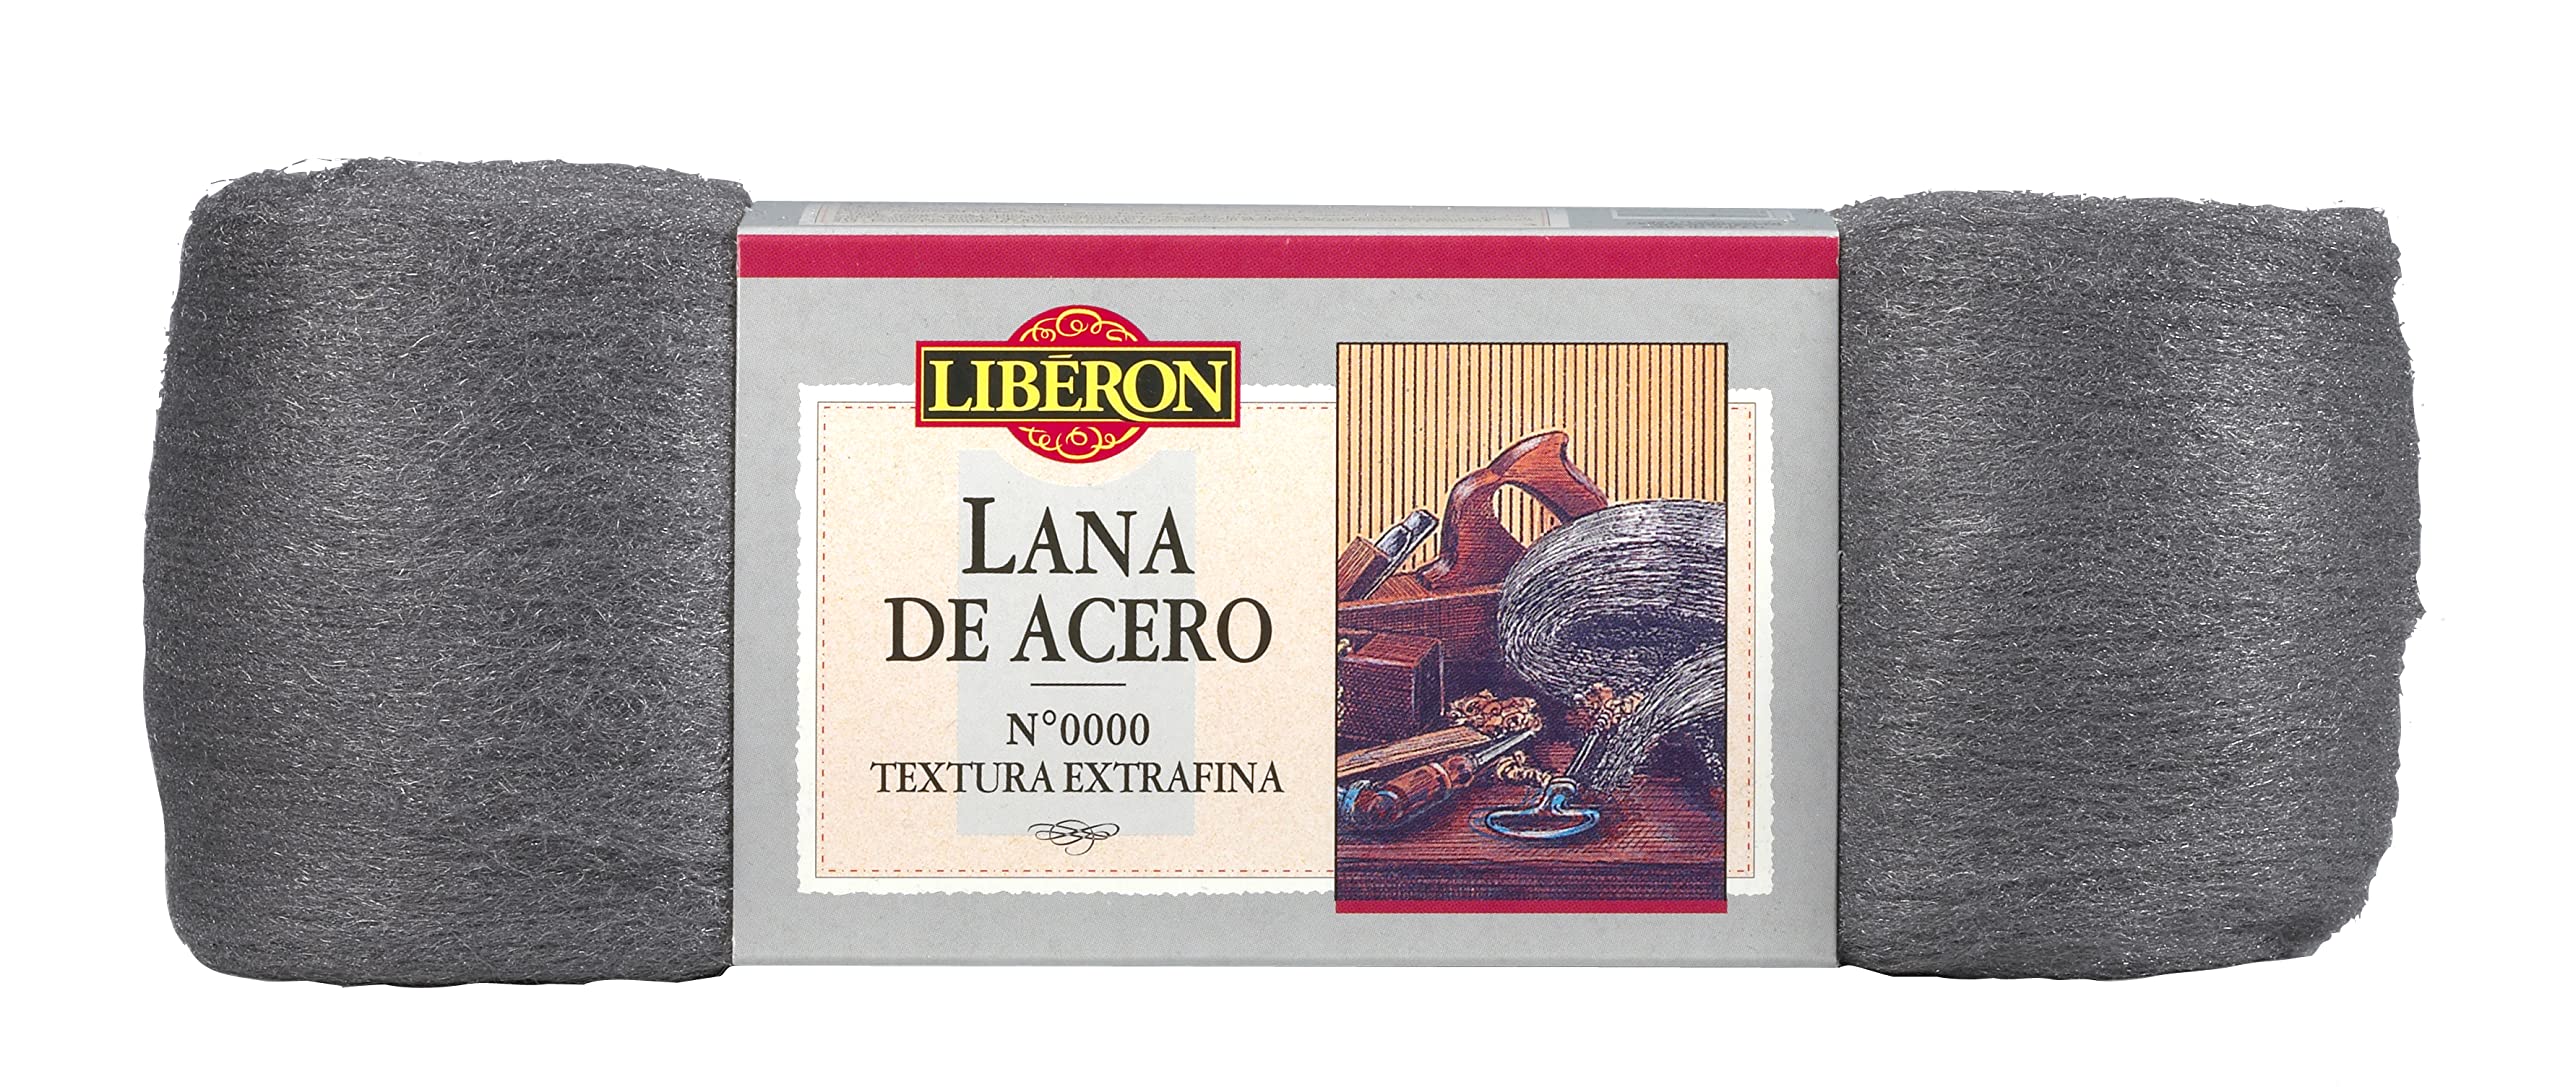 Liberon LANA DE ACERO 0000 1 KG, standard, 0.1, 004381